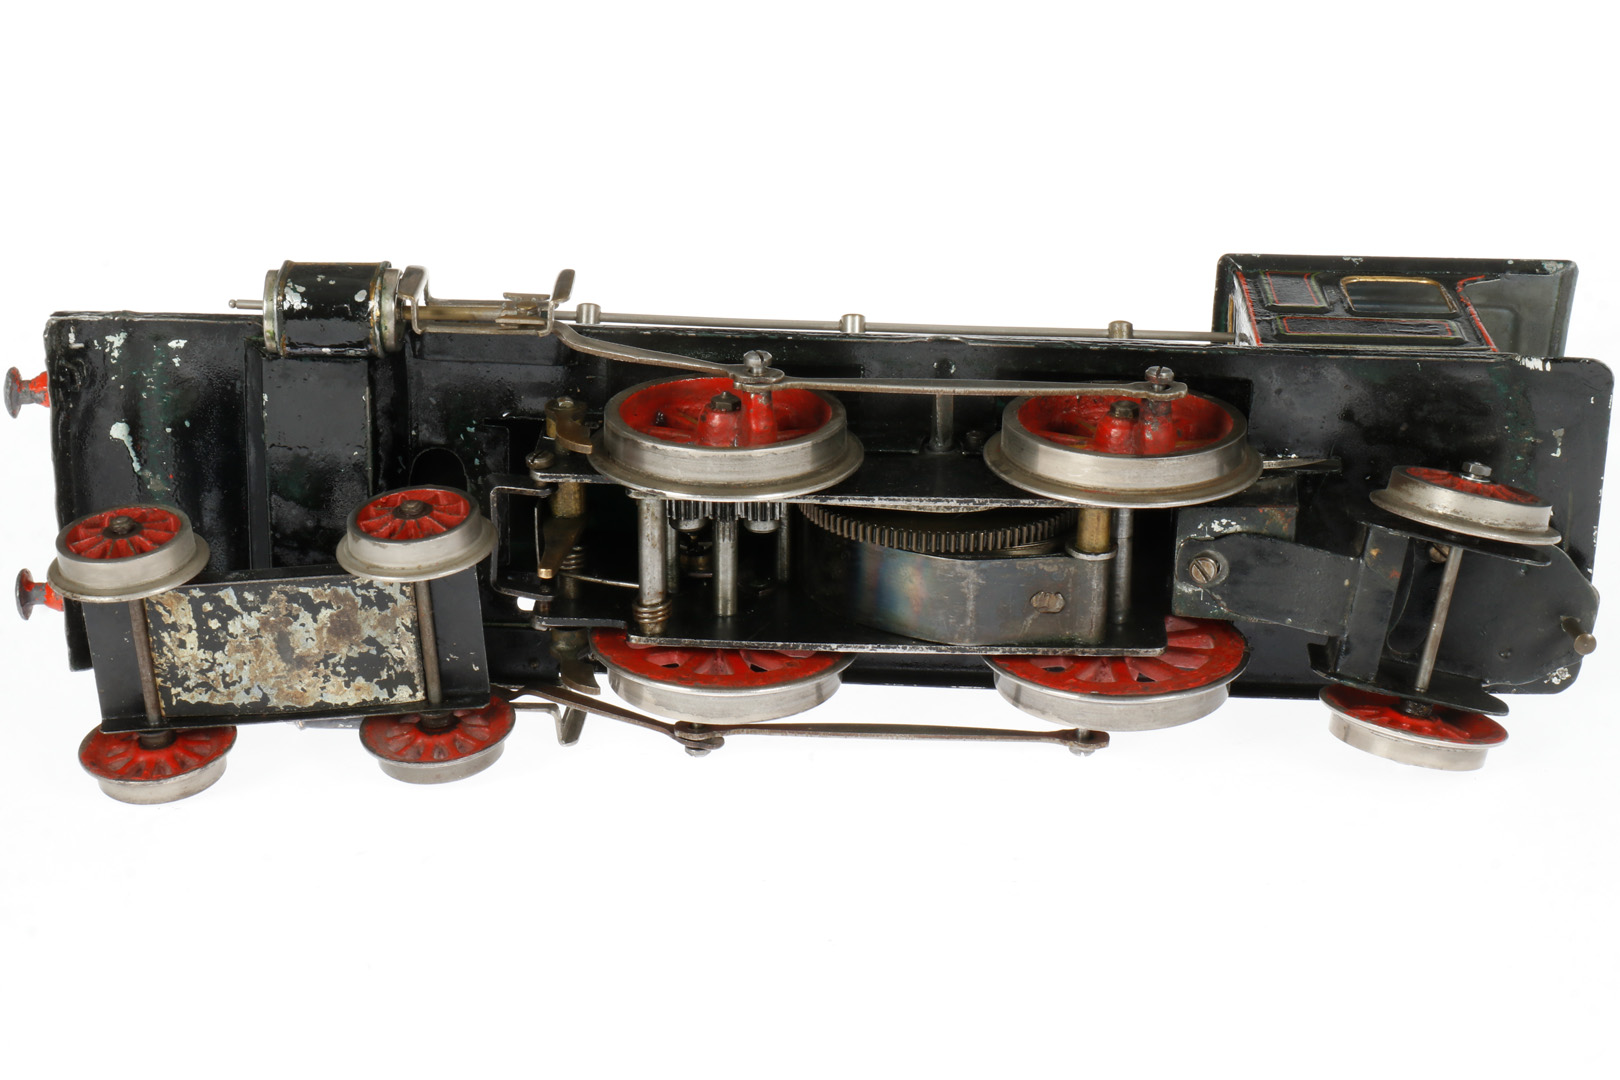 Märklin 2-B-1 Dampflok CE 1021, mit 3A-Tender, S 1, uralt, handlackiert, 2 imit. Stirnlampen, - Image 4 of 7